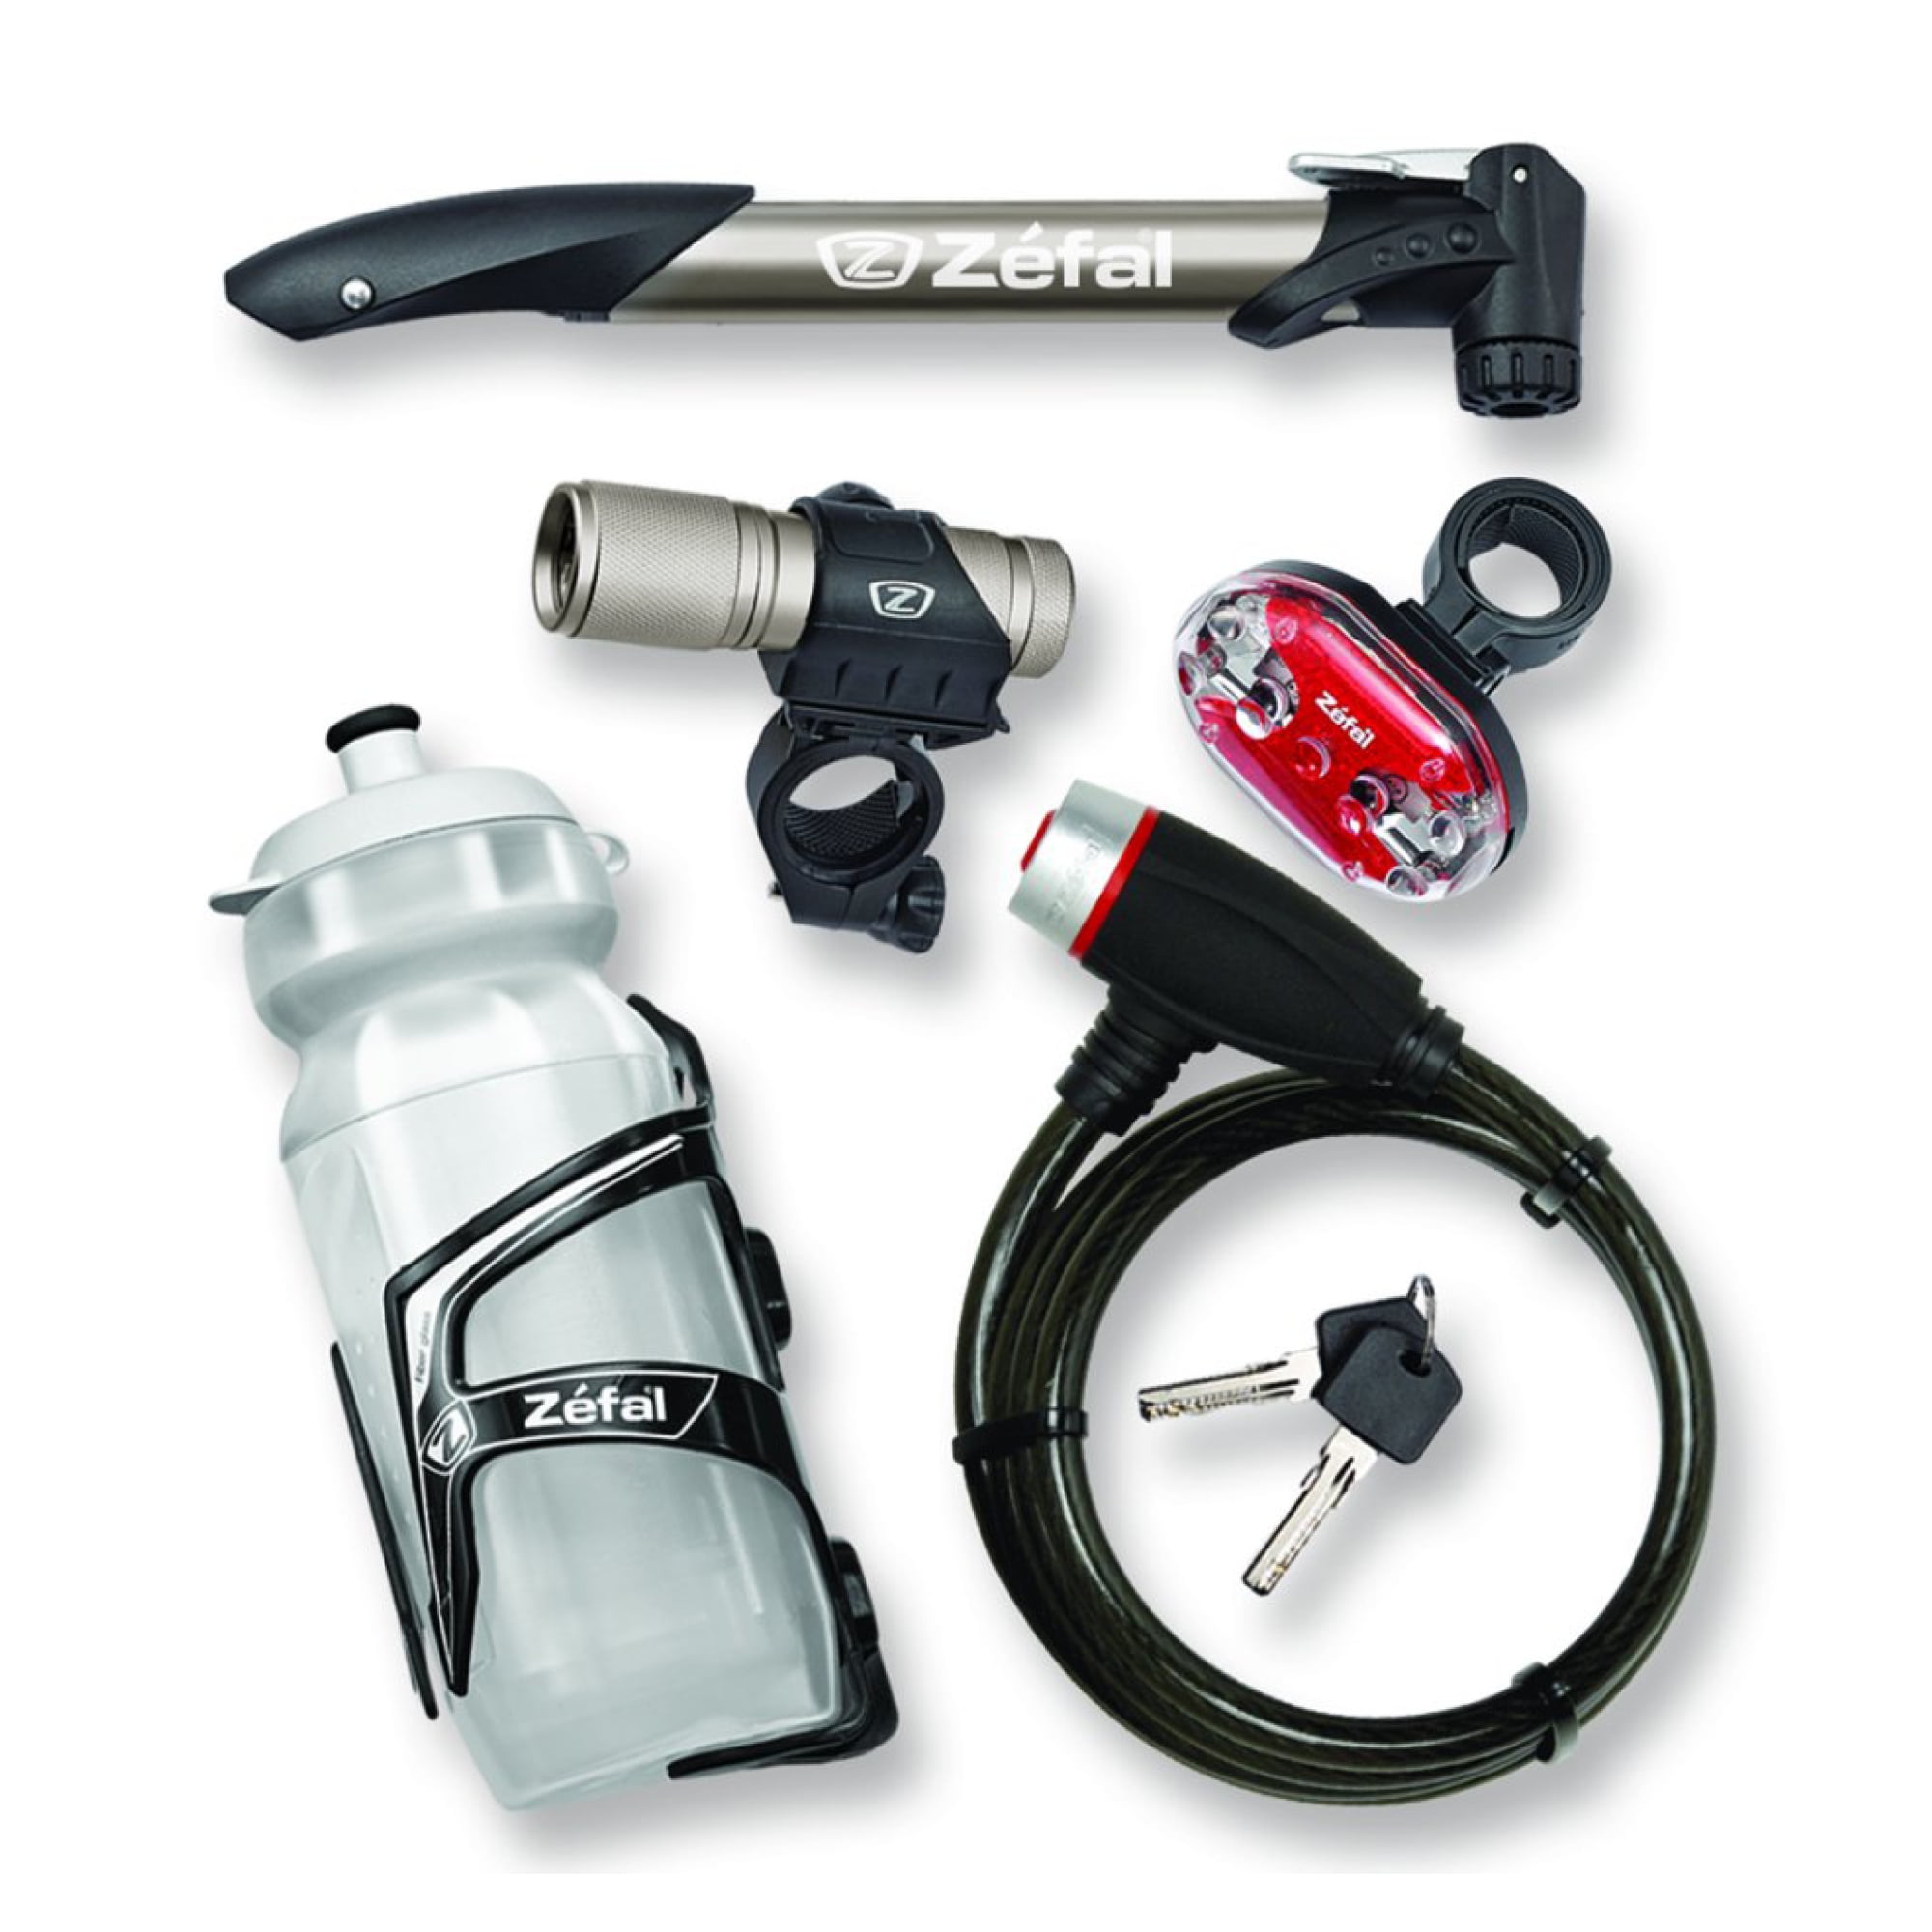 Zefal 6-Piece Bike Accessories Starter Pack (Pump, Lock, Water Bottle + Cage, Front + Rear Light)